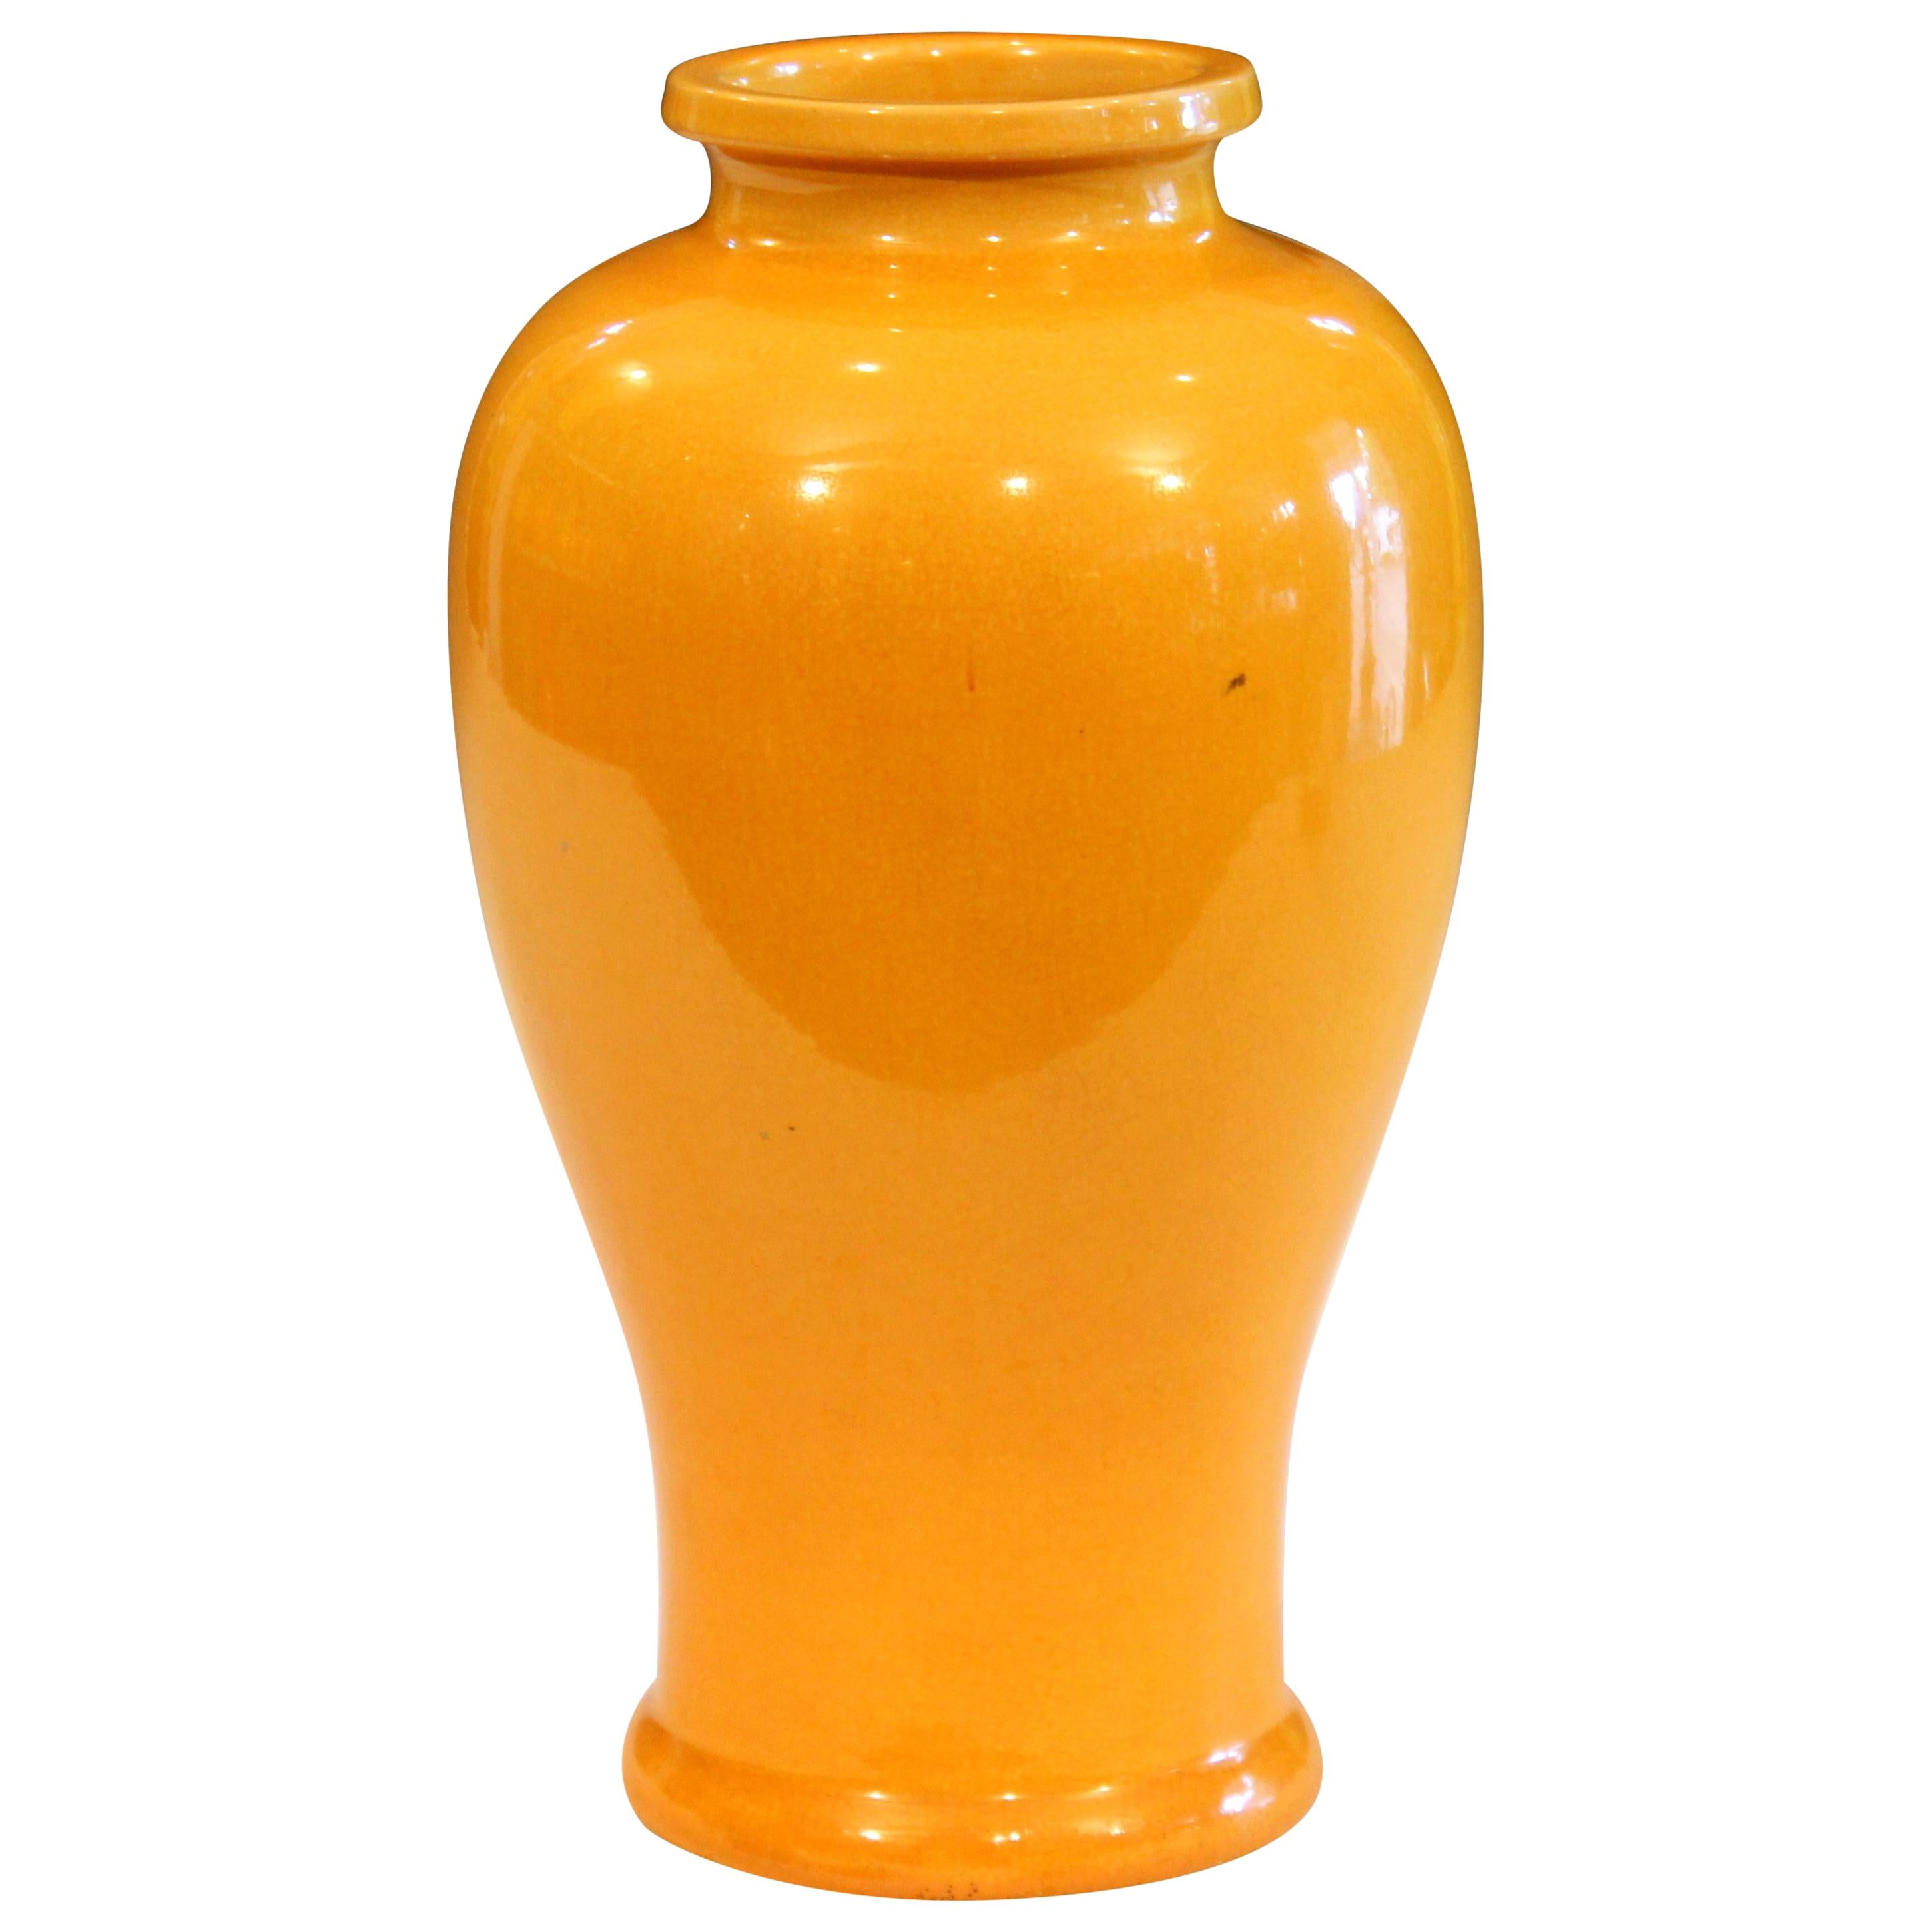 Awaji Pottery Wide Neck Bottle Vase in Yellow Monochrome Glaze